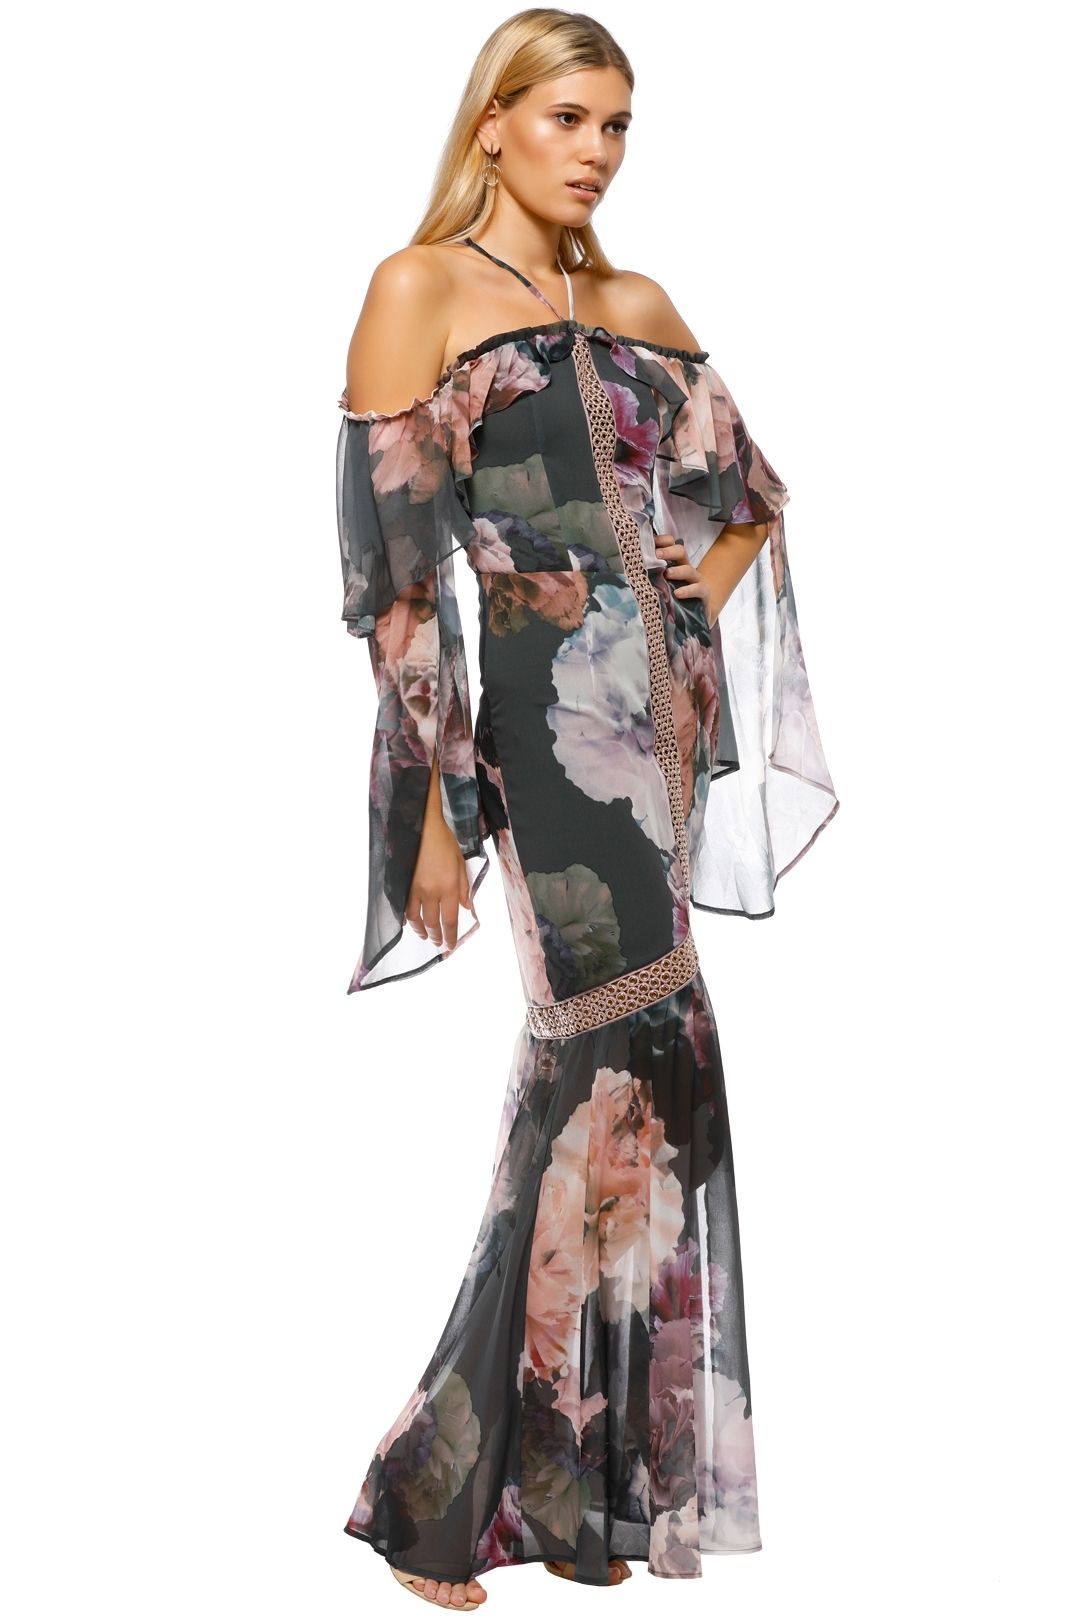 We Are Kindred - Valentina Split Maxi Dress - Gray Pink Floral - Side